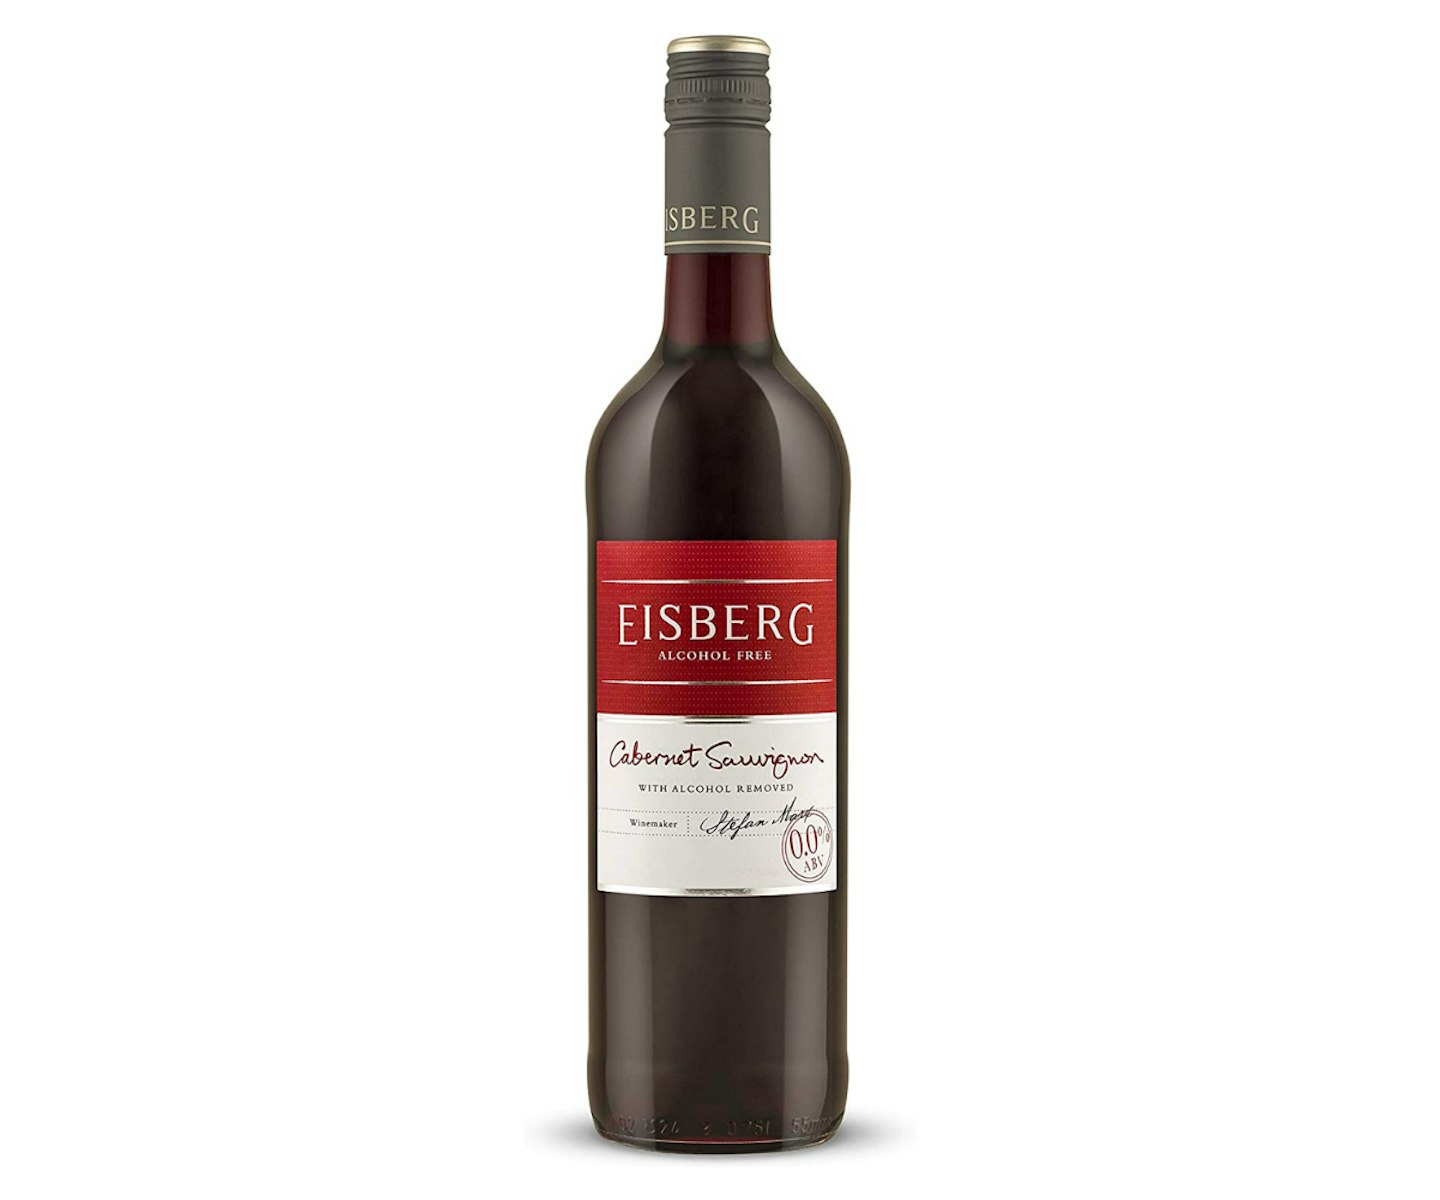 Eisberg Cabernet Sauvignon Alcohol Free Red Wine